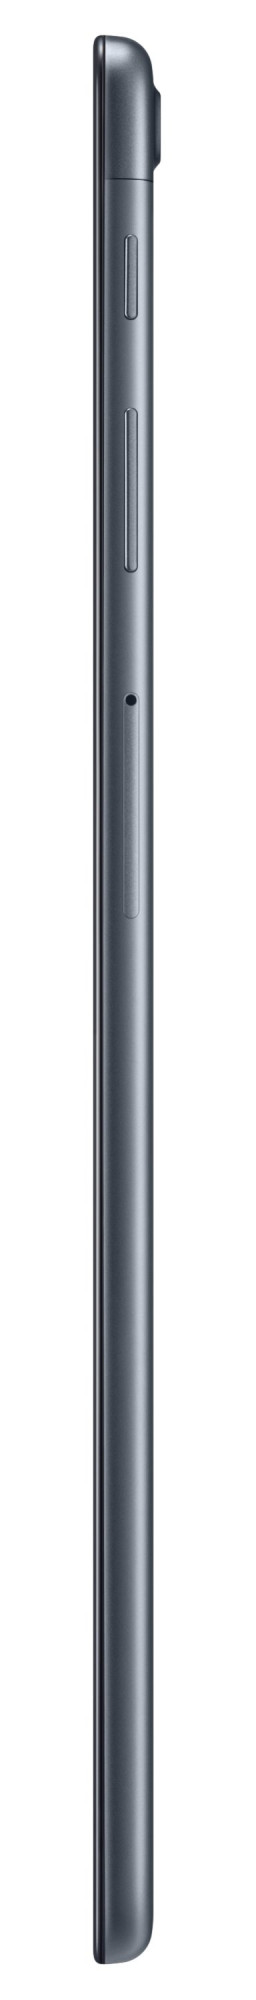 Планшет Samsung Galaxy Tab A T510 10.1 Wi-Fi 2/32GB Black (SM-T510NZKD)